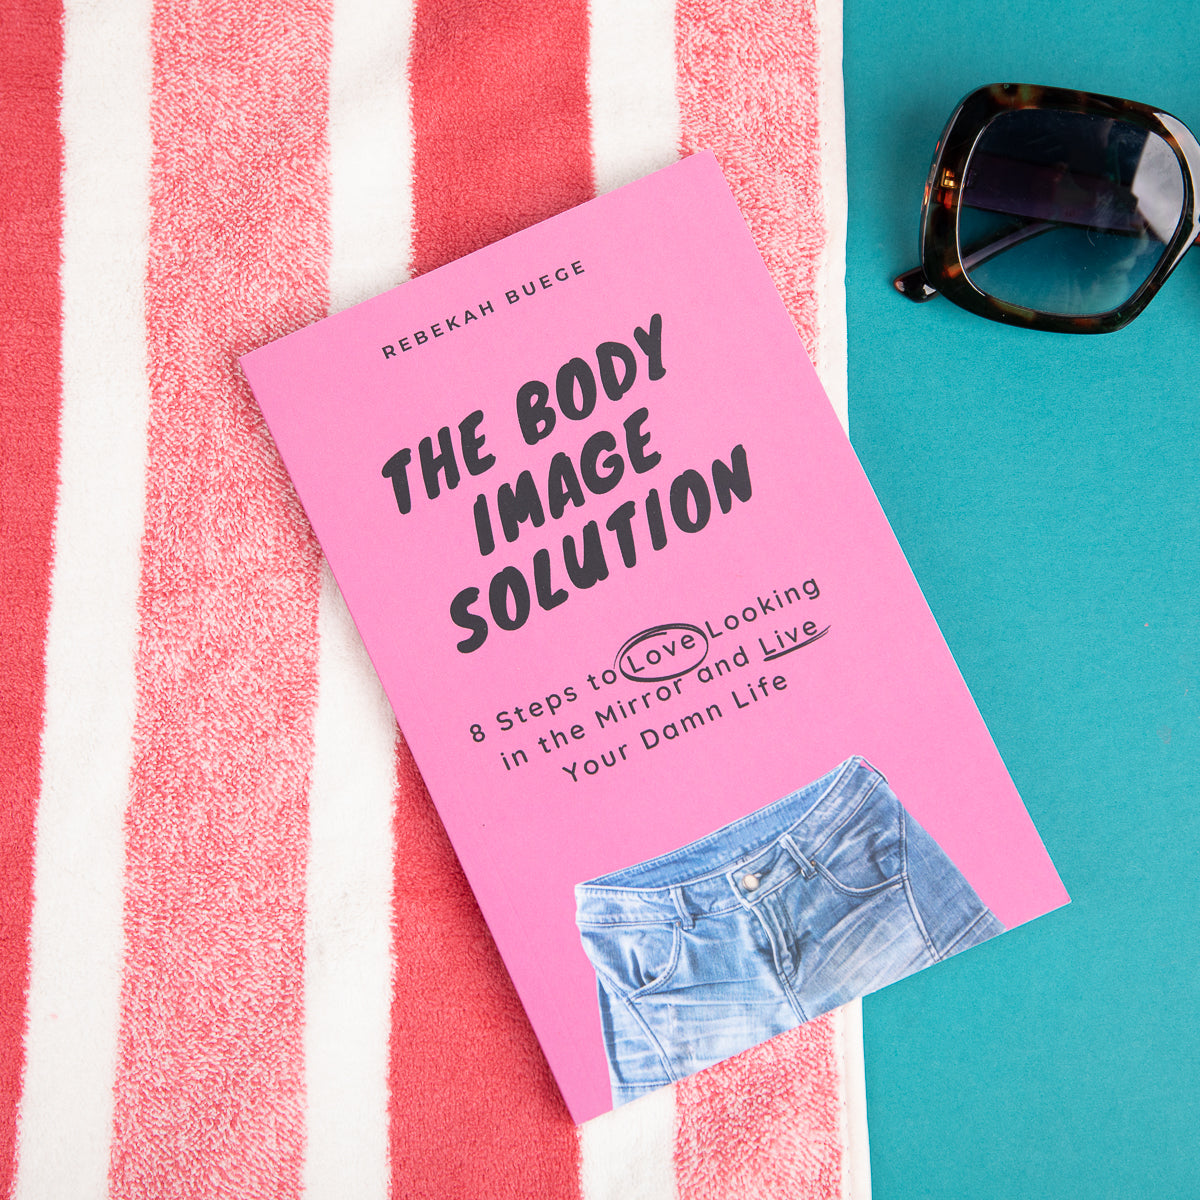 'The Body Image Solution' by Rebekah Buege